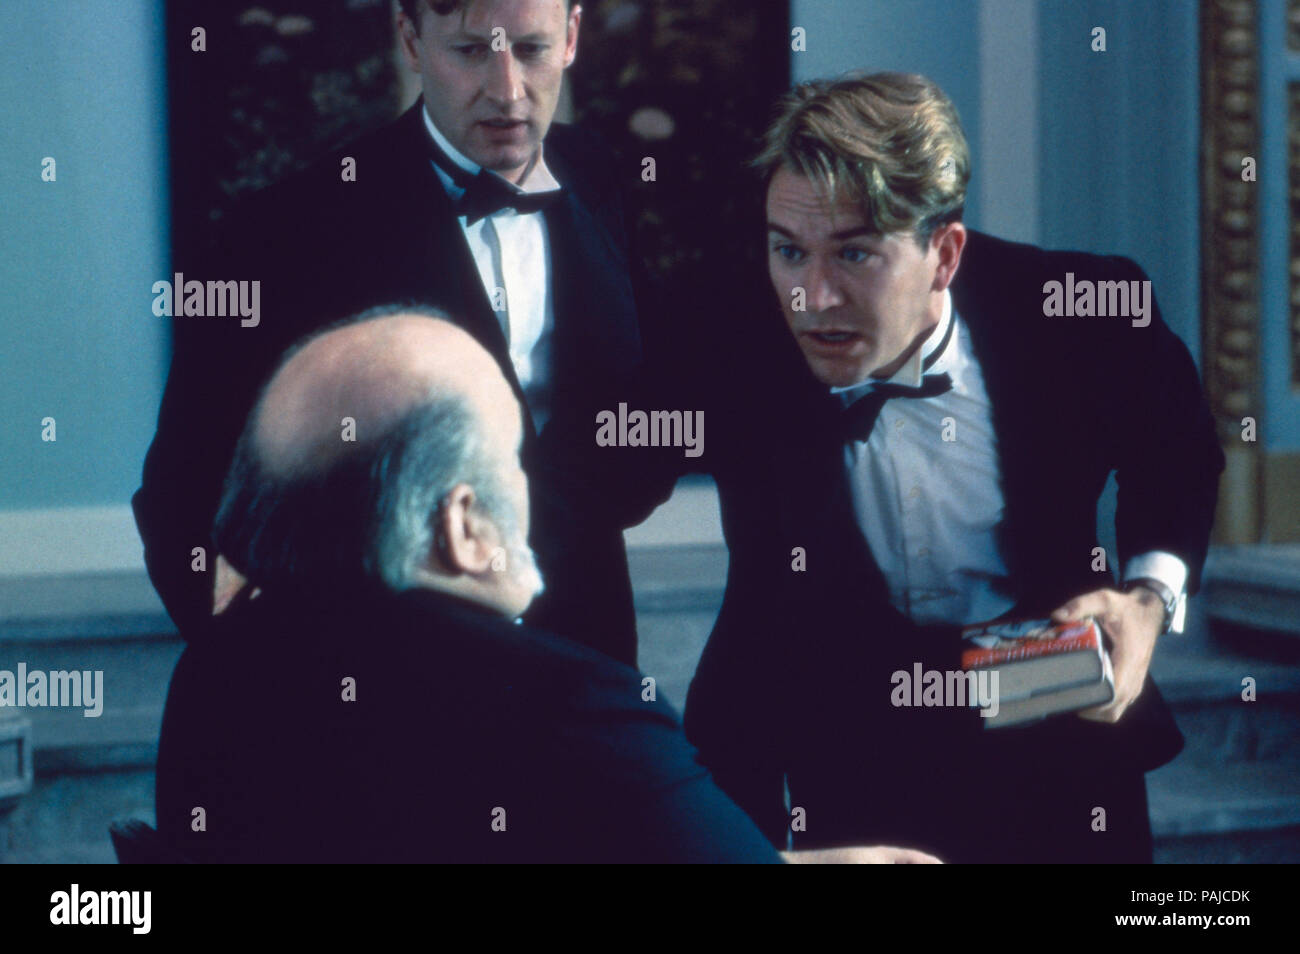 Zelda; Fernsehfilm, USA 1993, Regie: Pat O'Connor, Darsteller: Timothy Hutton (rechts) Stock Photo